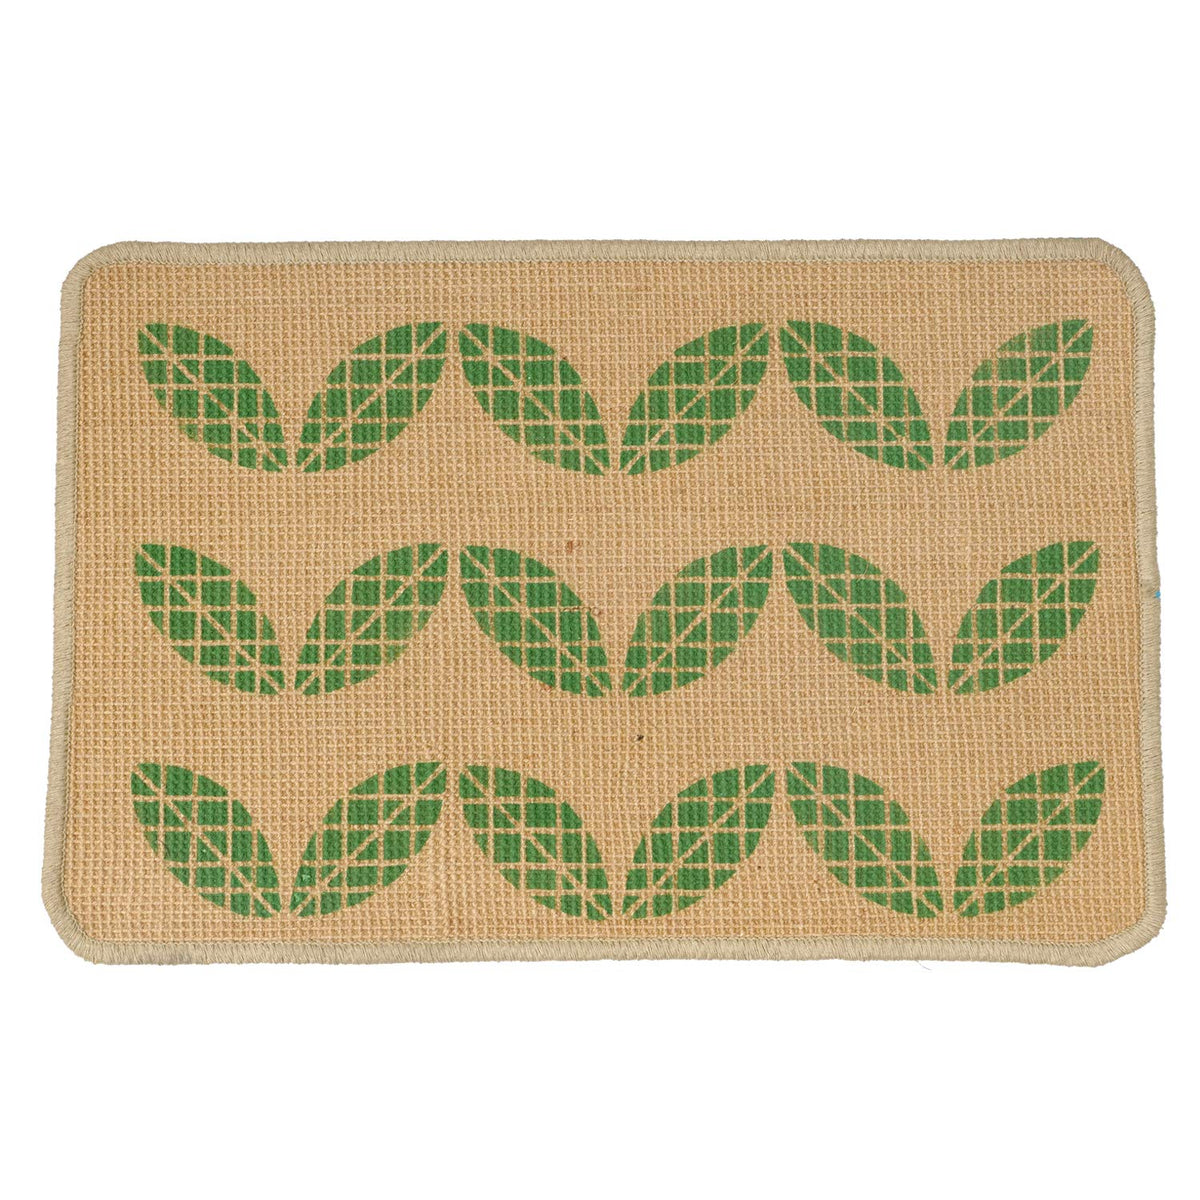 Green Leaf Printed Natural Coir Floor Mat - OnlyMat